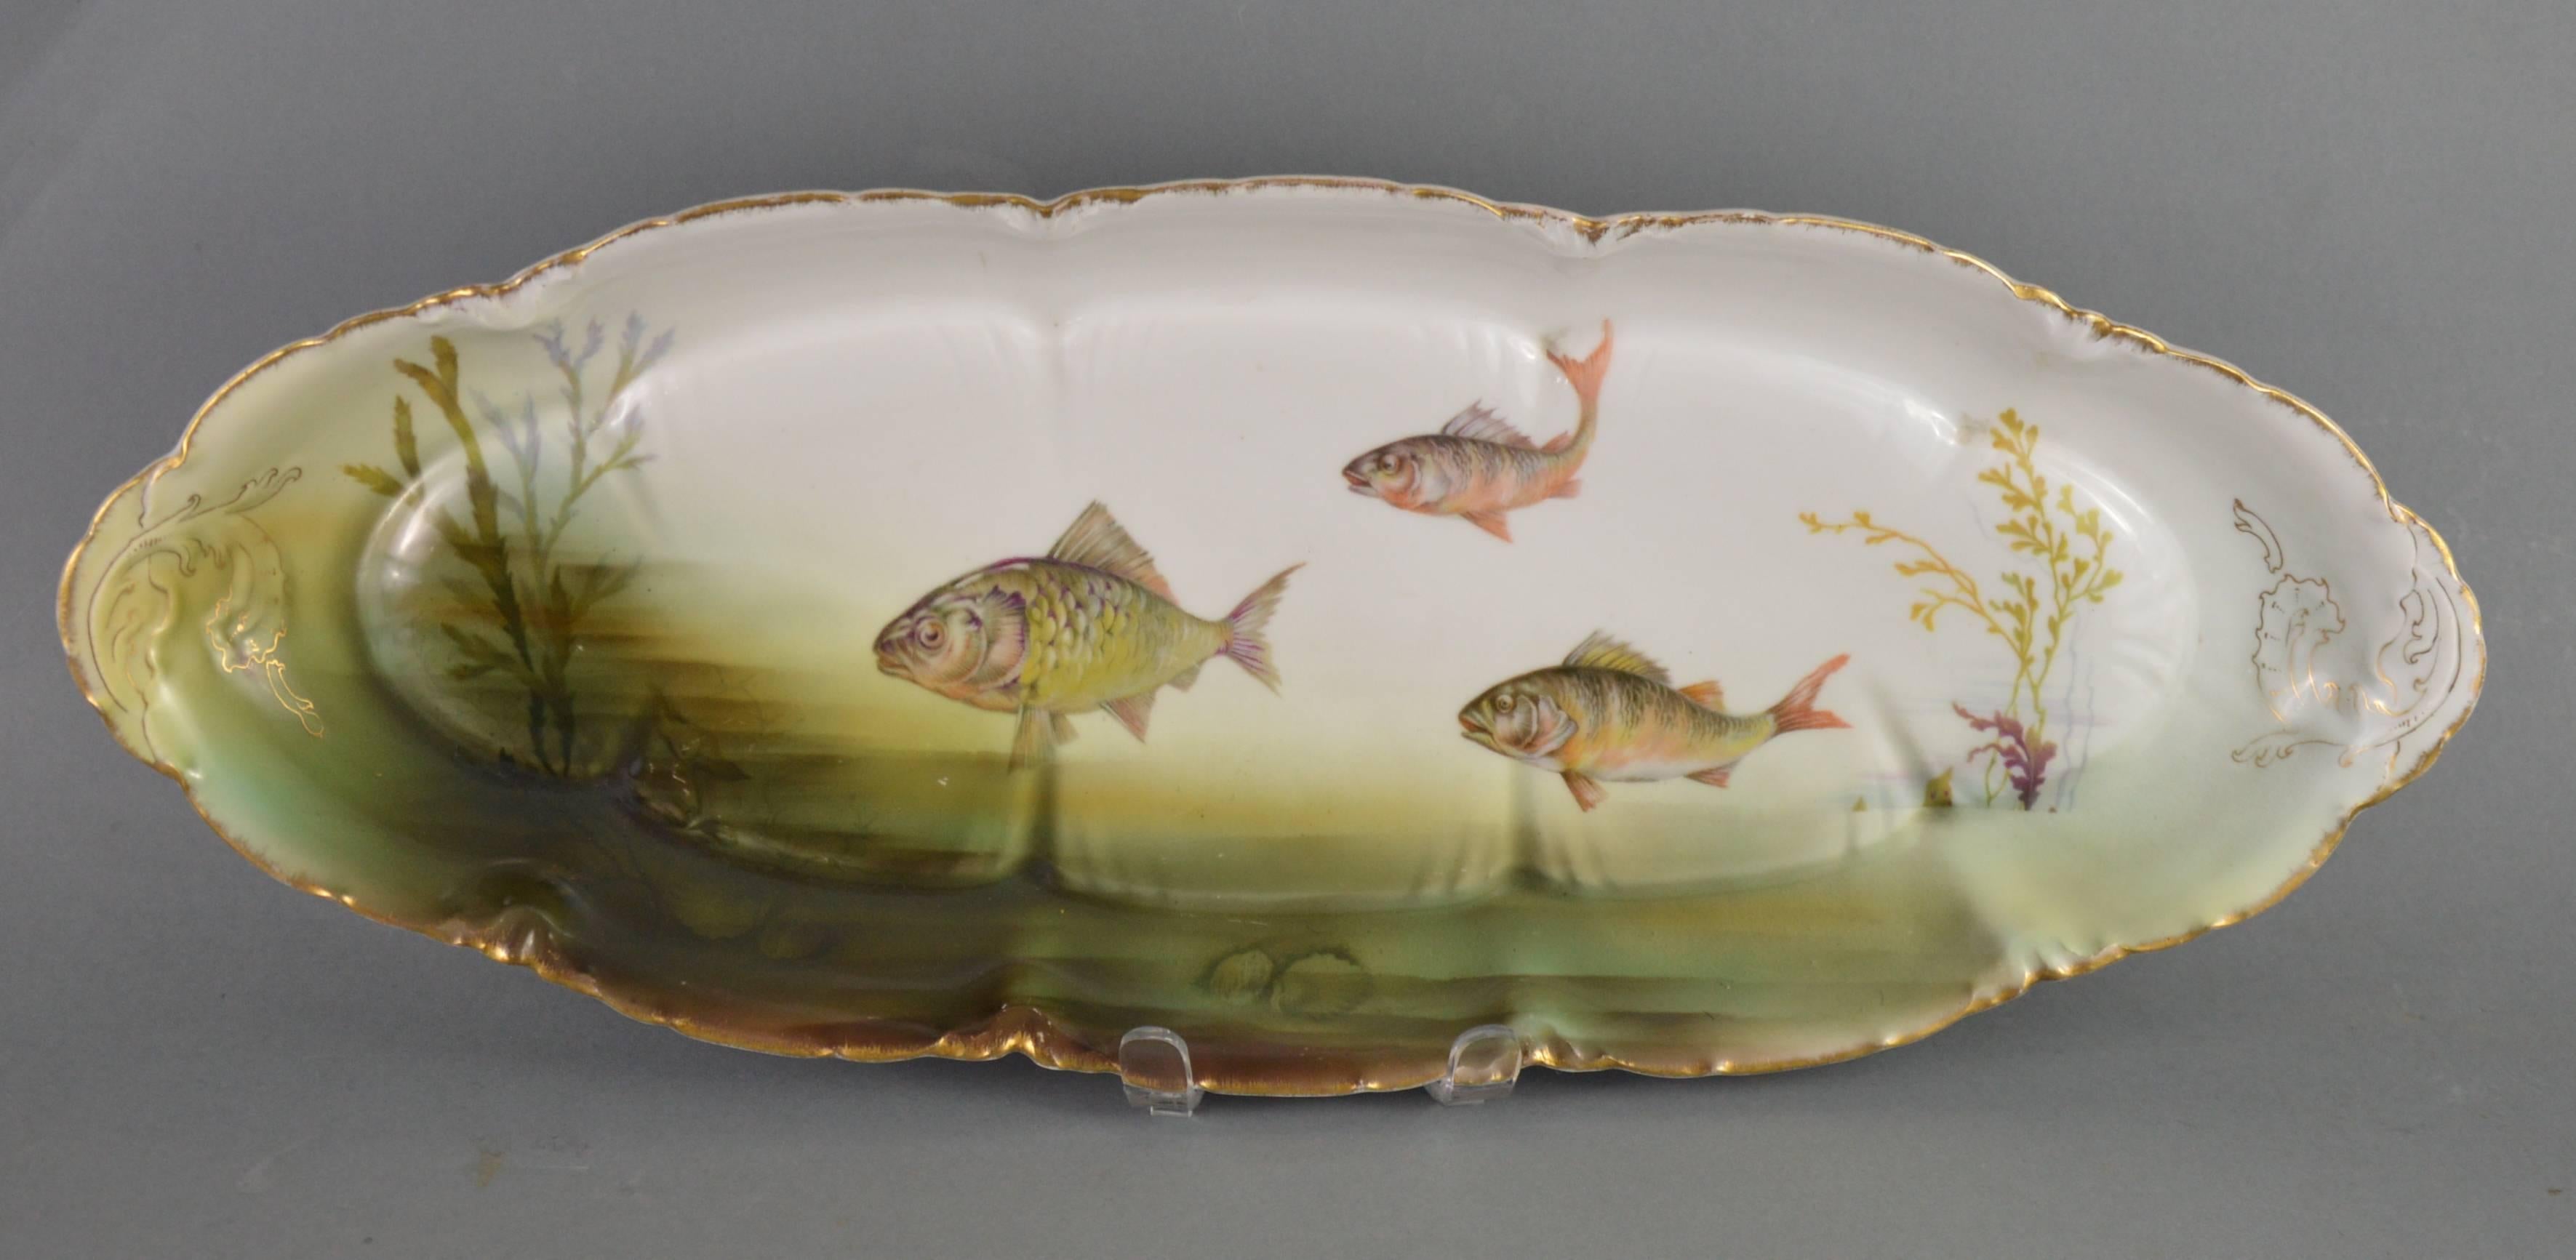 Antique Rosenthal porcelain fish service. Large dish and ten plates.
Provenance: Rosenthal, Germany.
Period: circa 1910.
Medium: porcelain.
Dimensions: dish 59 x 23 cm, Ø (plate) 23 cm.
Condition: Good condition, no cracks, no chips, no